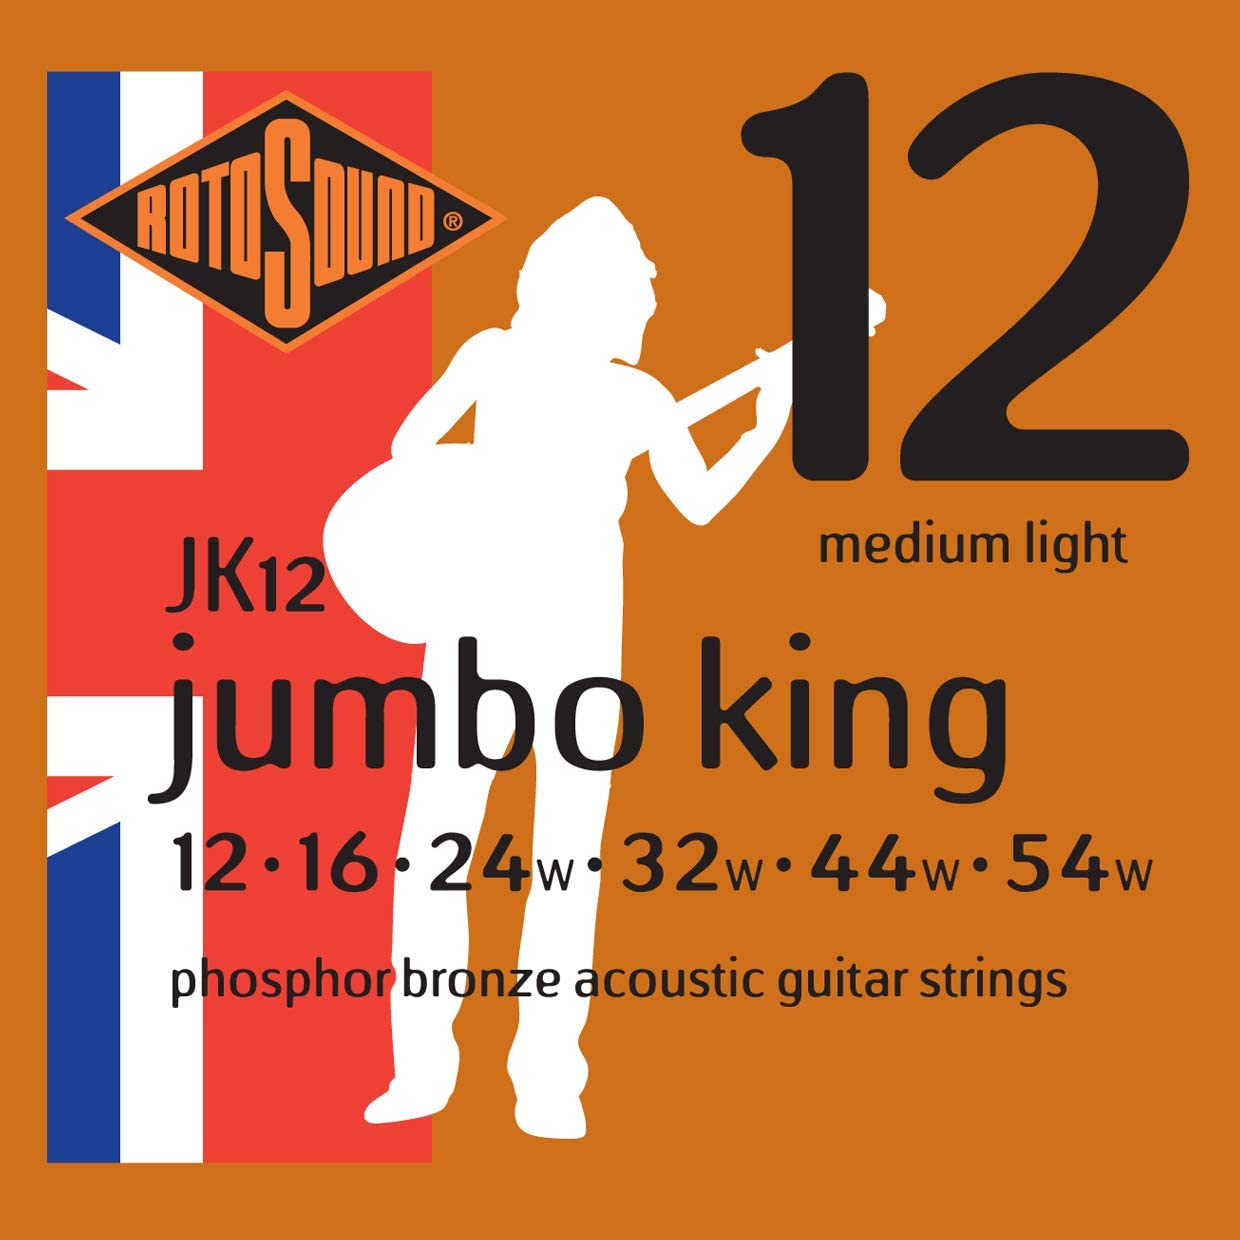 Rotosound JK12 Jumbo King Phosphor Bronze Acoustic Guitar Strings - 12-54